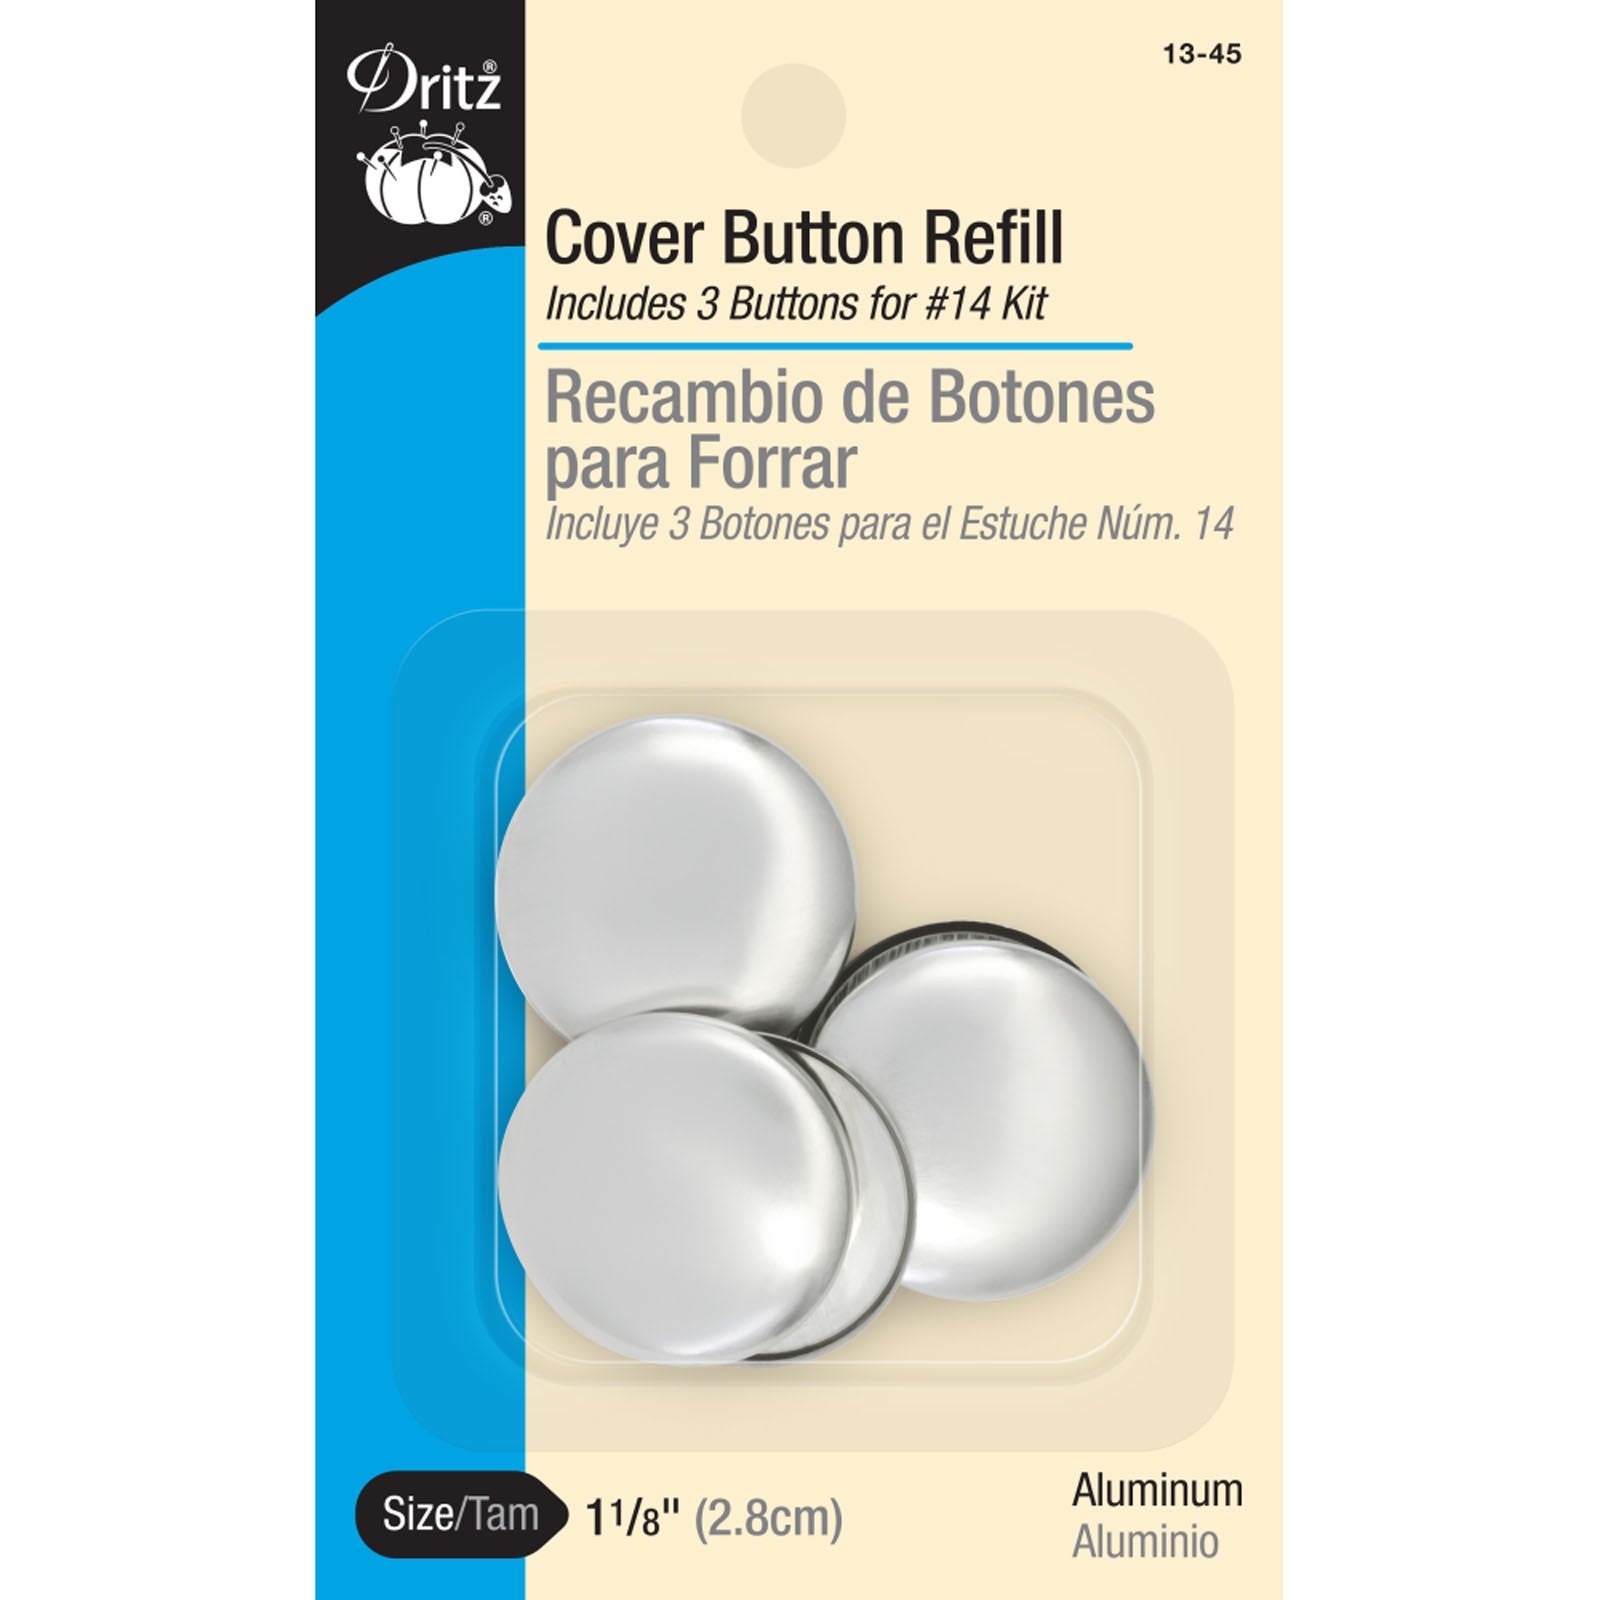 Dritz Cover Button Refill size 45 1.12"